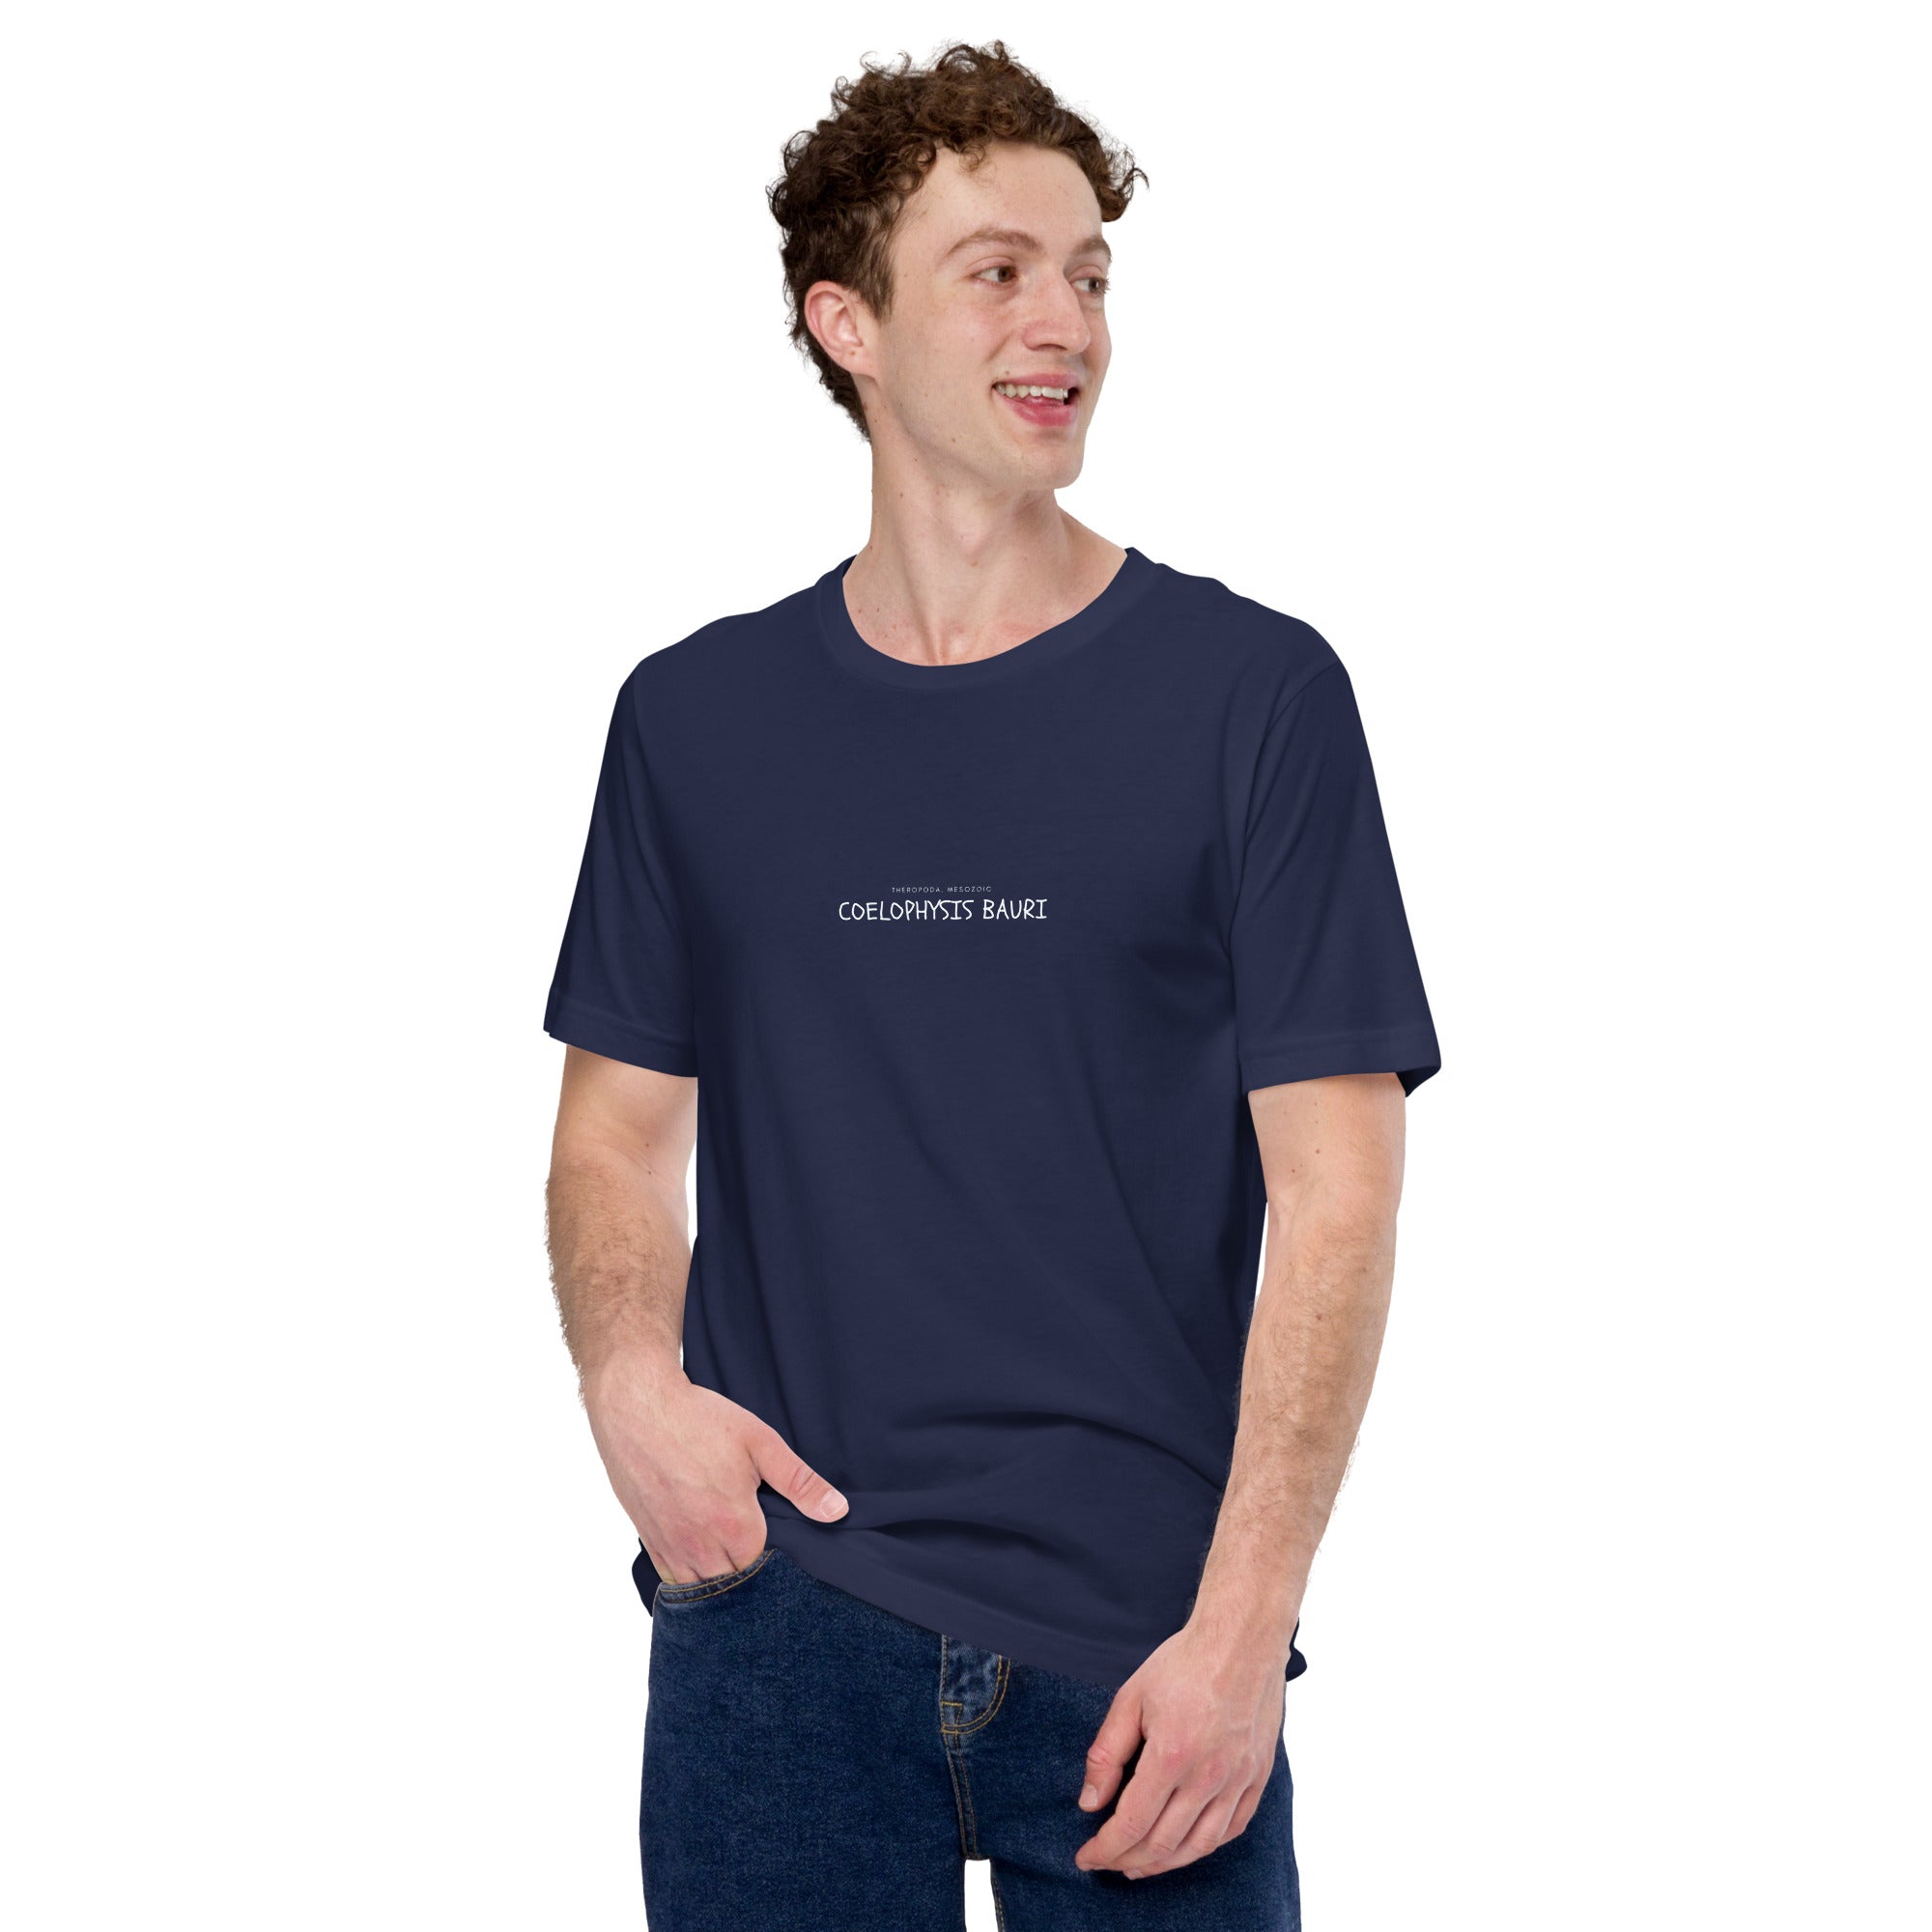 Camiseta unisex con texto "Coelophysis bauri"